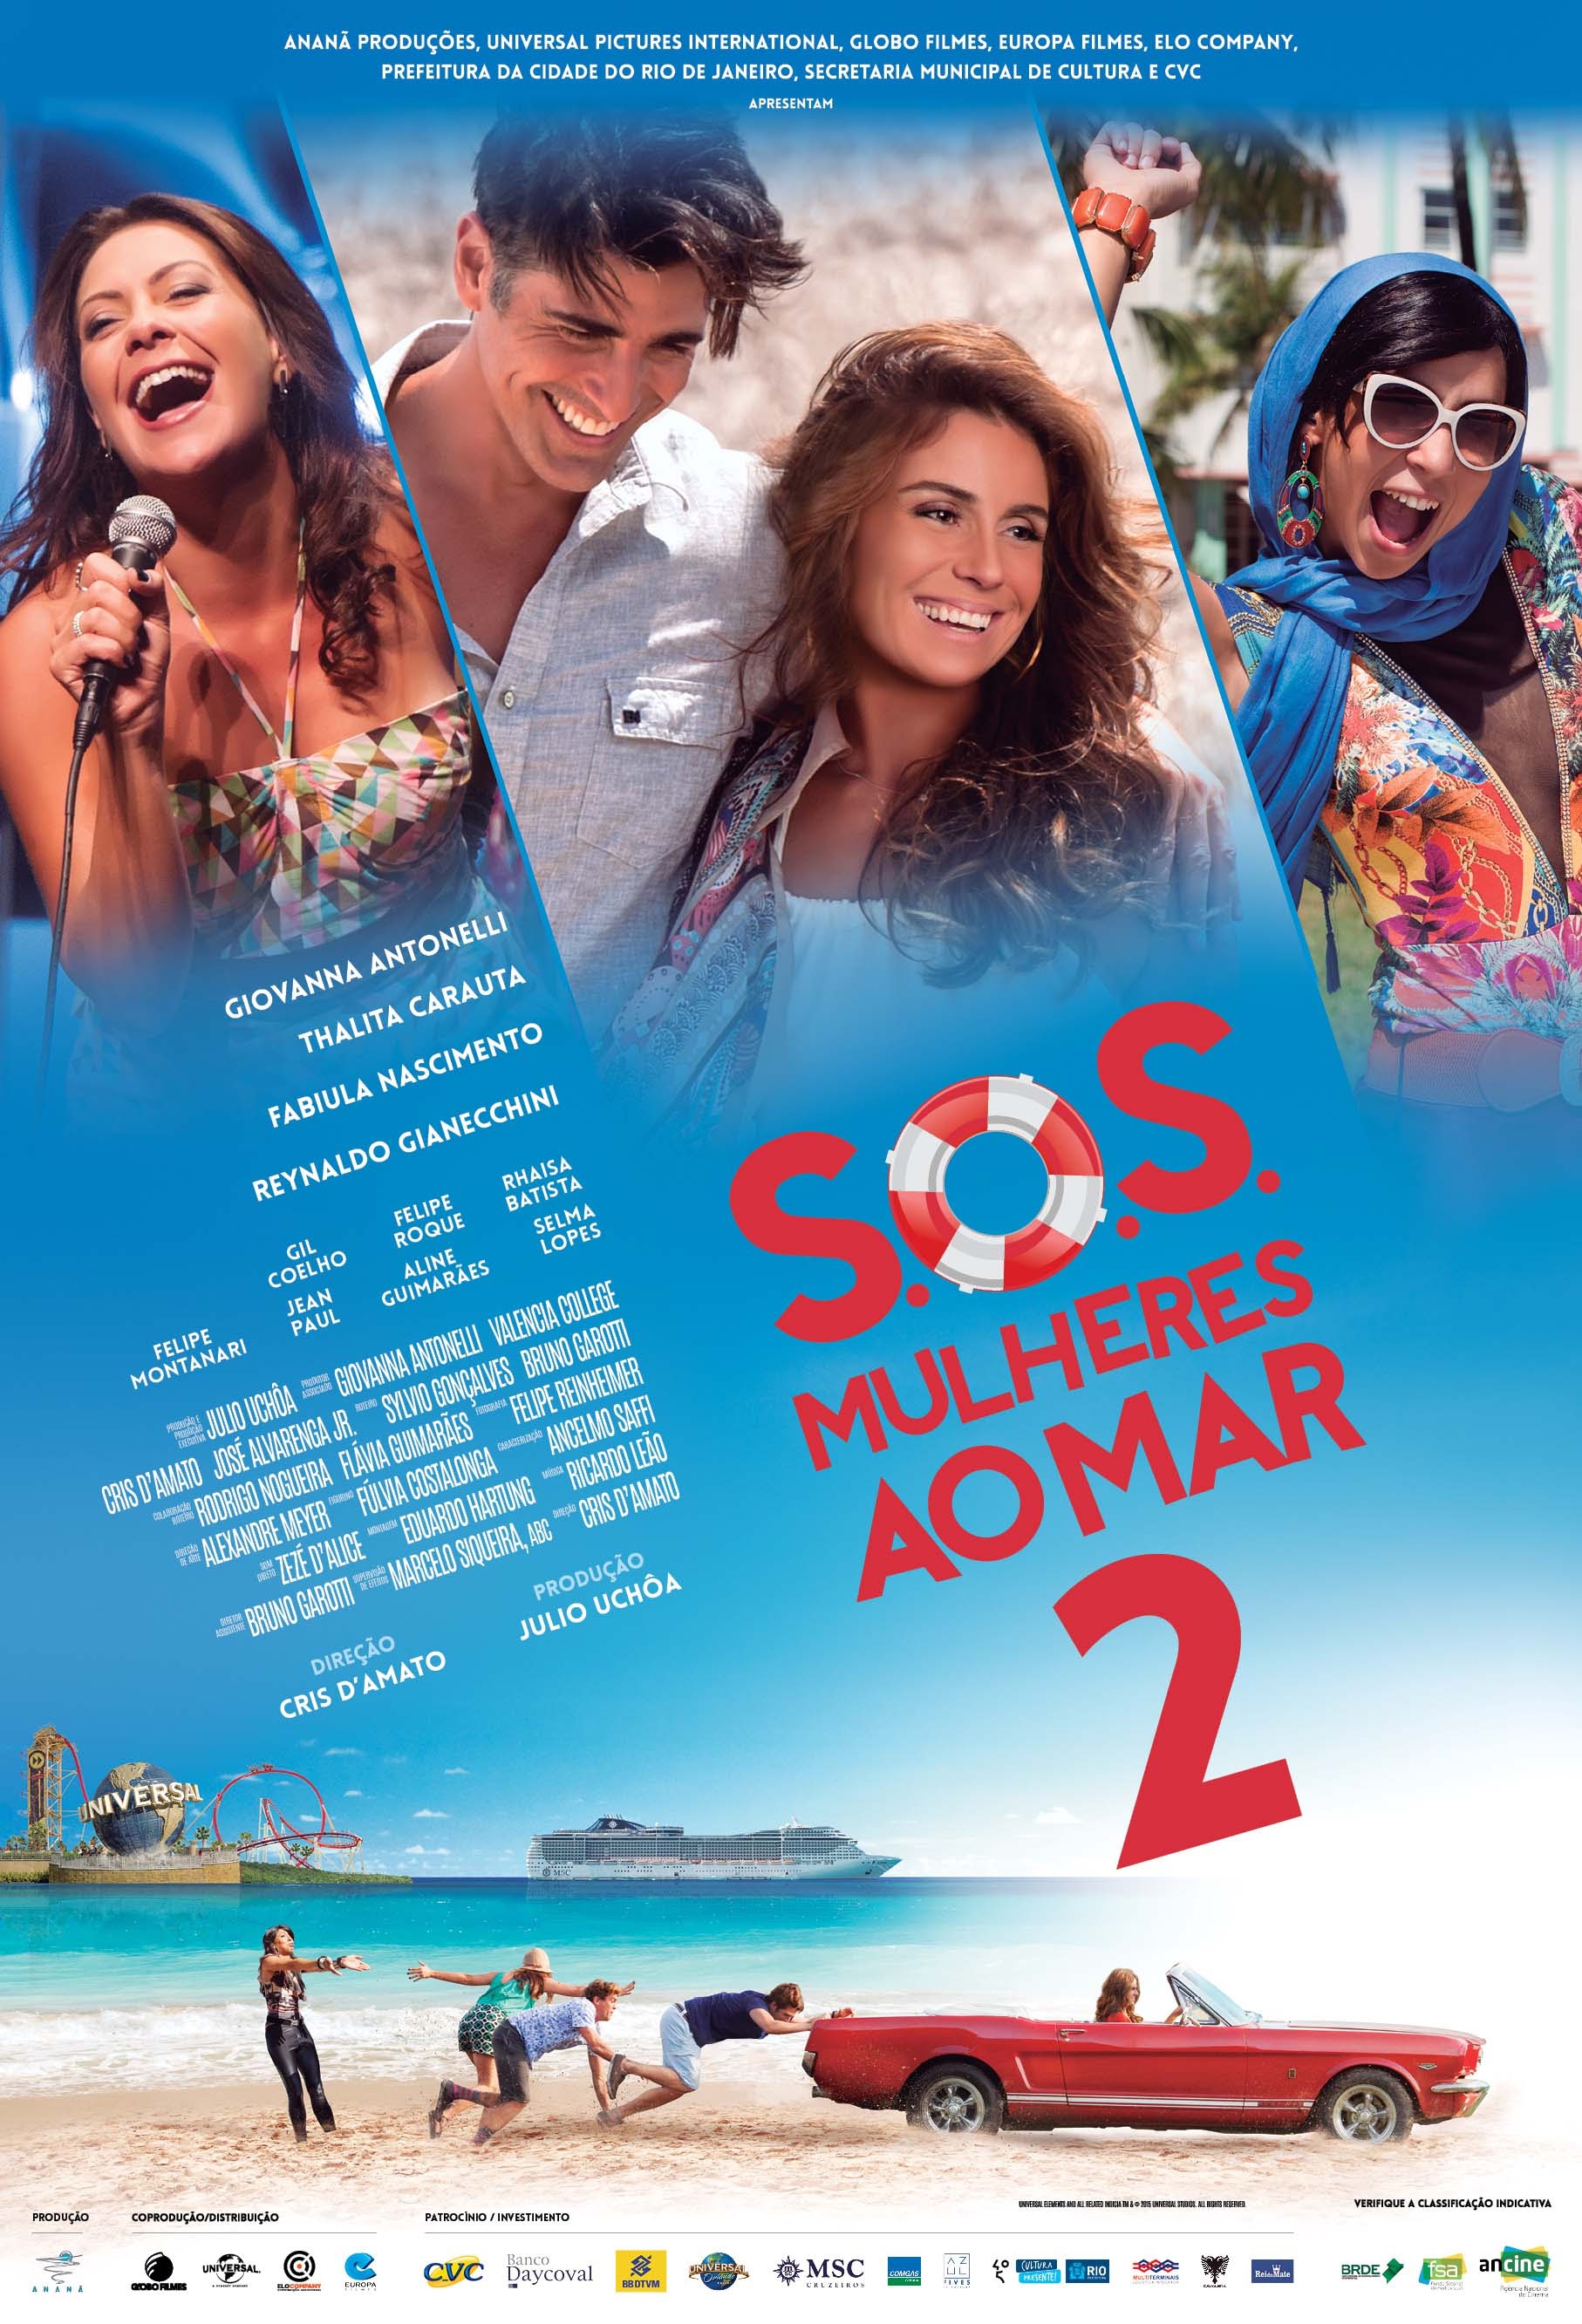  S.O.S Mulheres ao Mar 2  (2015) Poster 